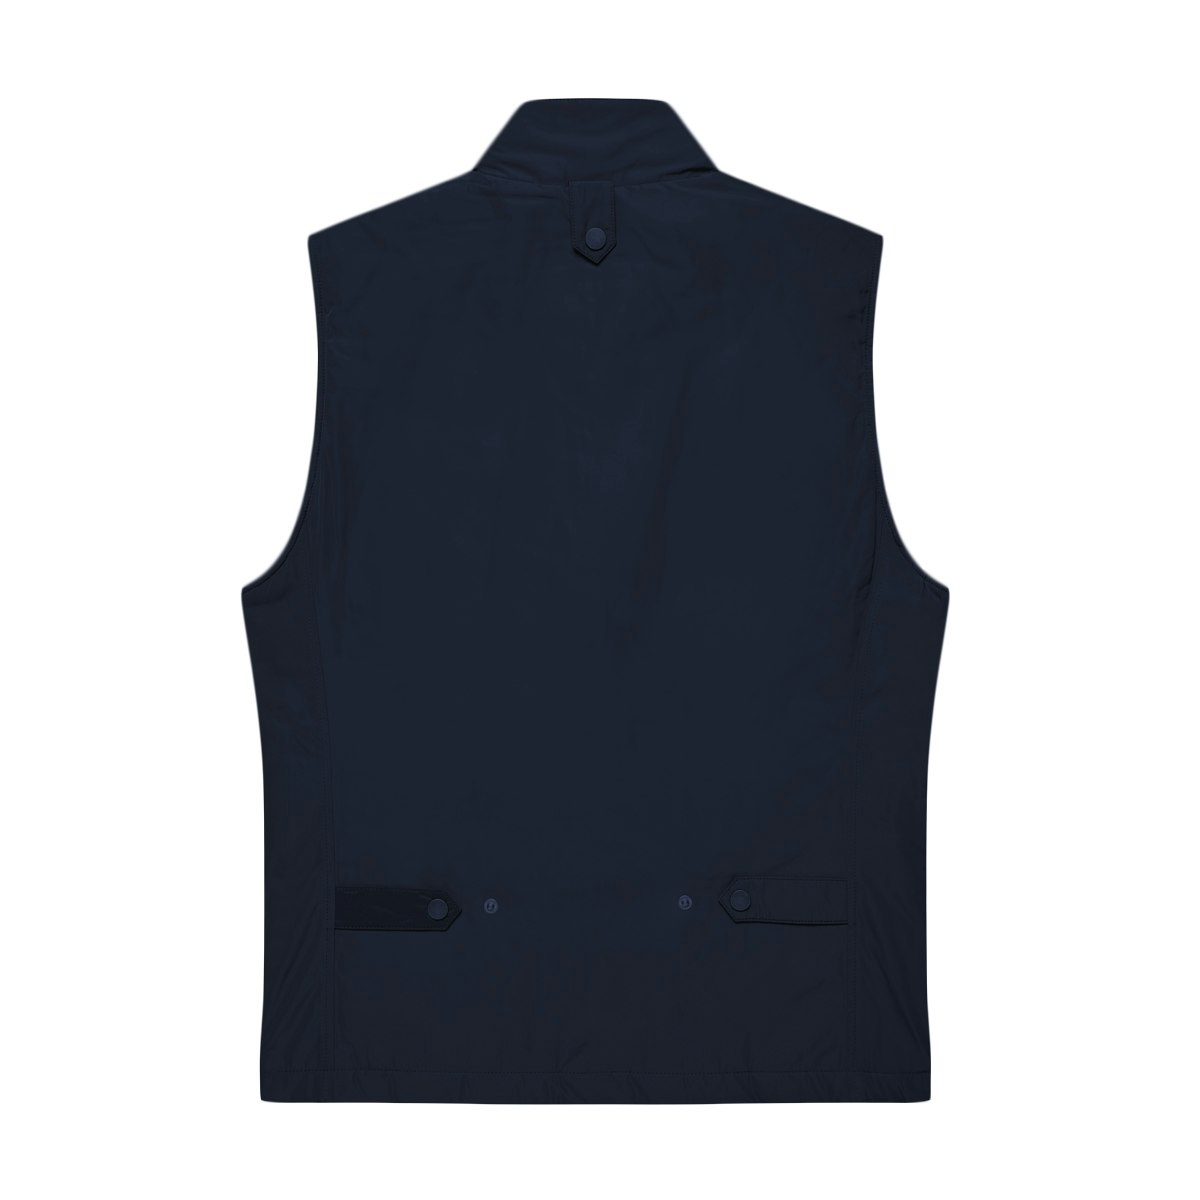 The Pemberton Navy Vest